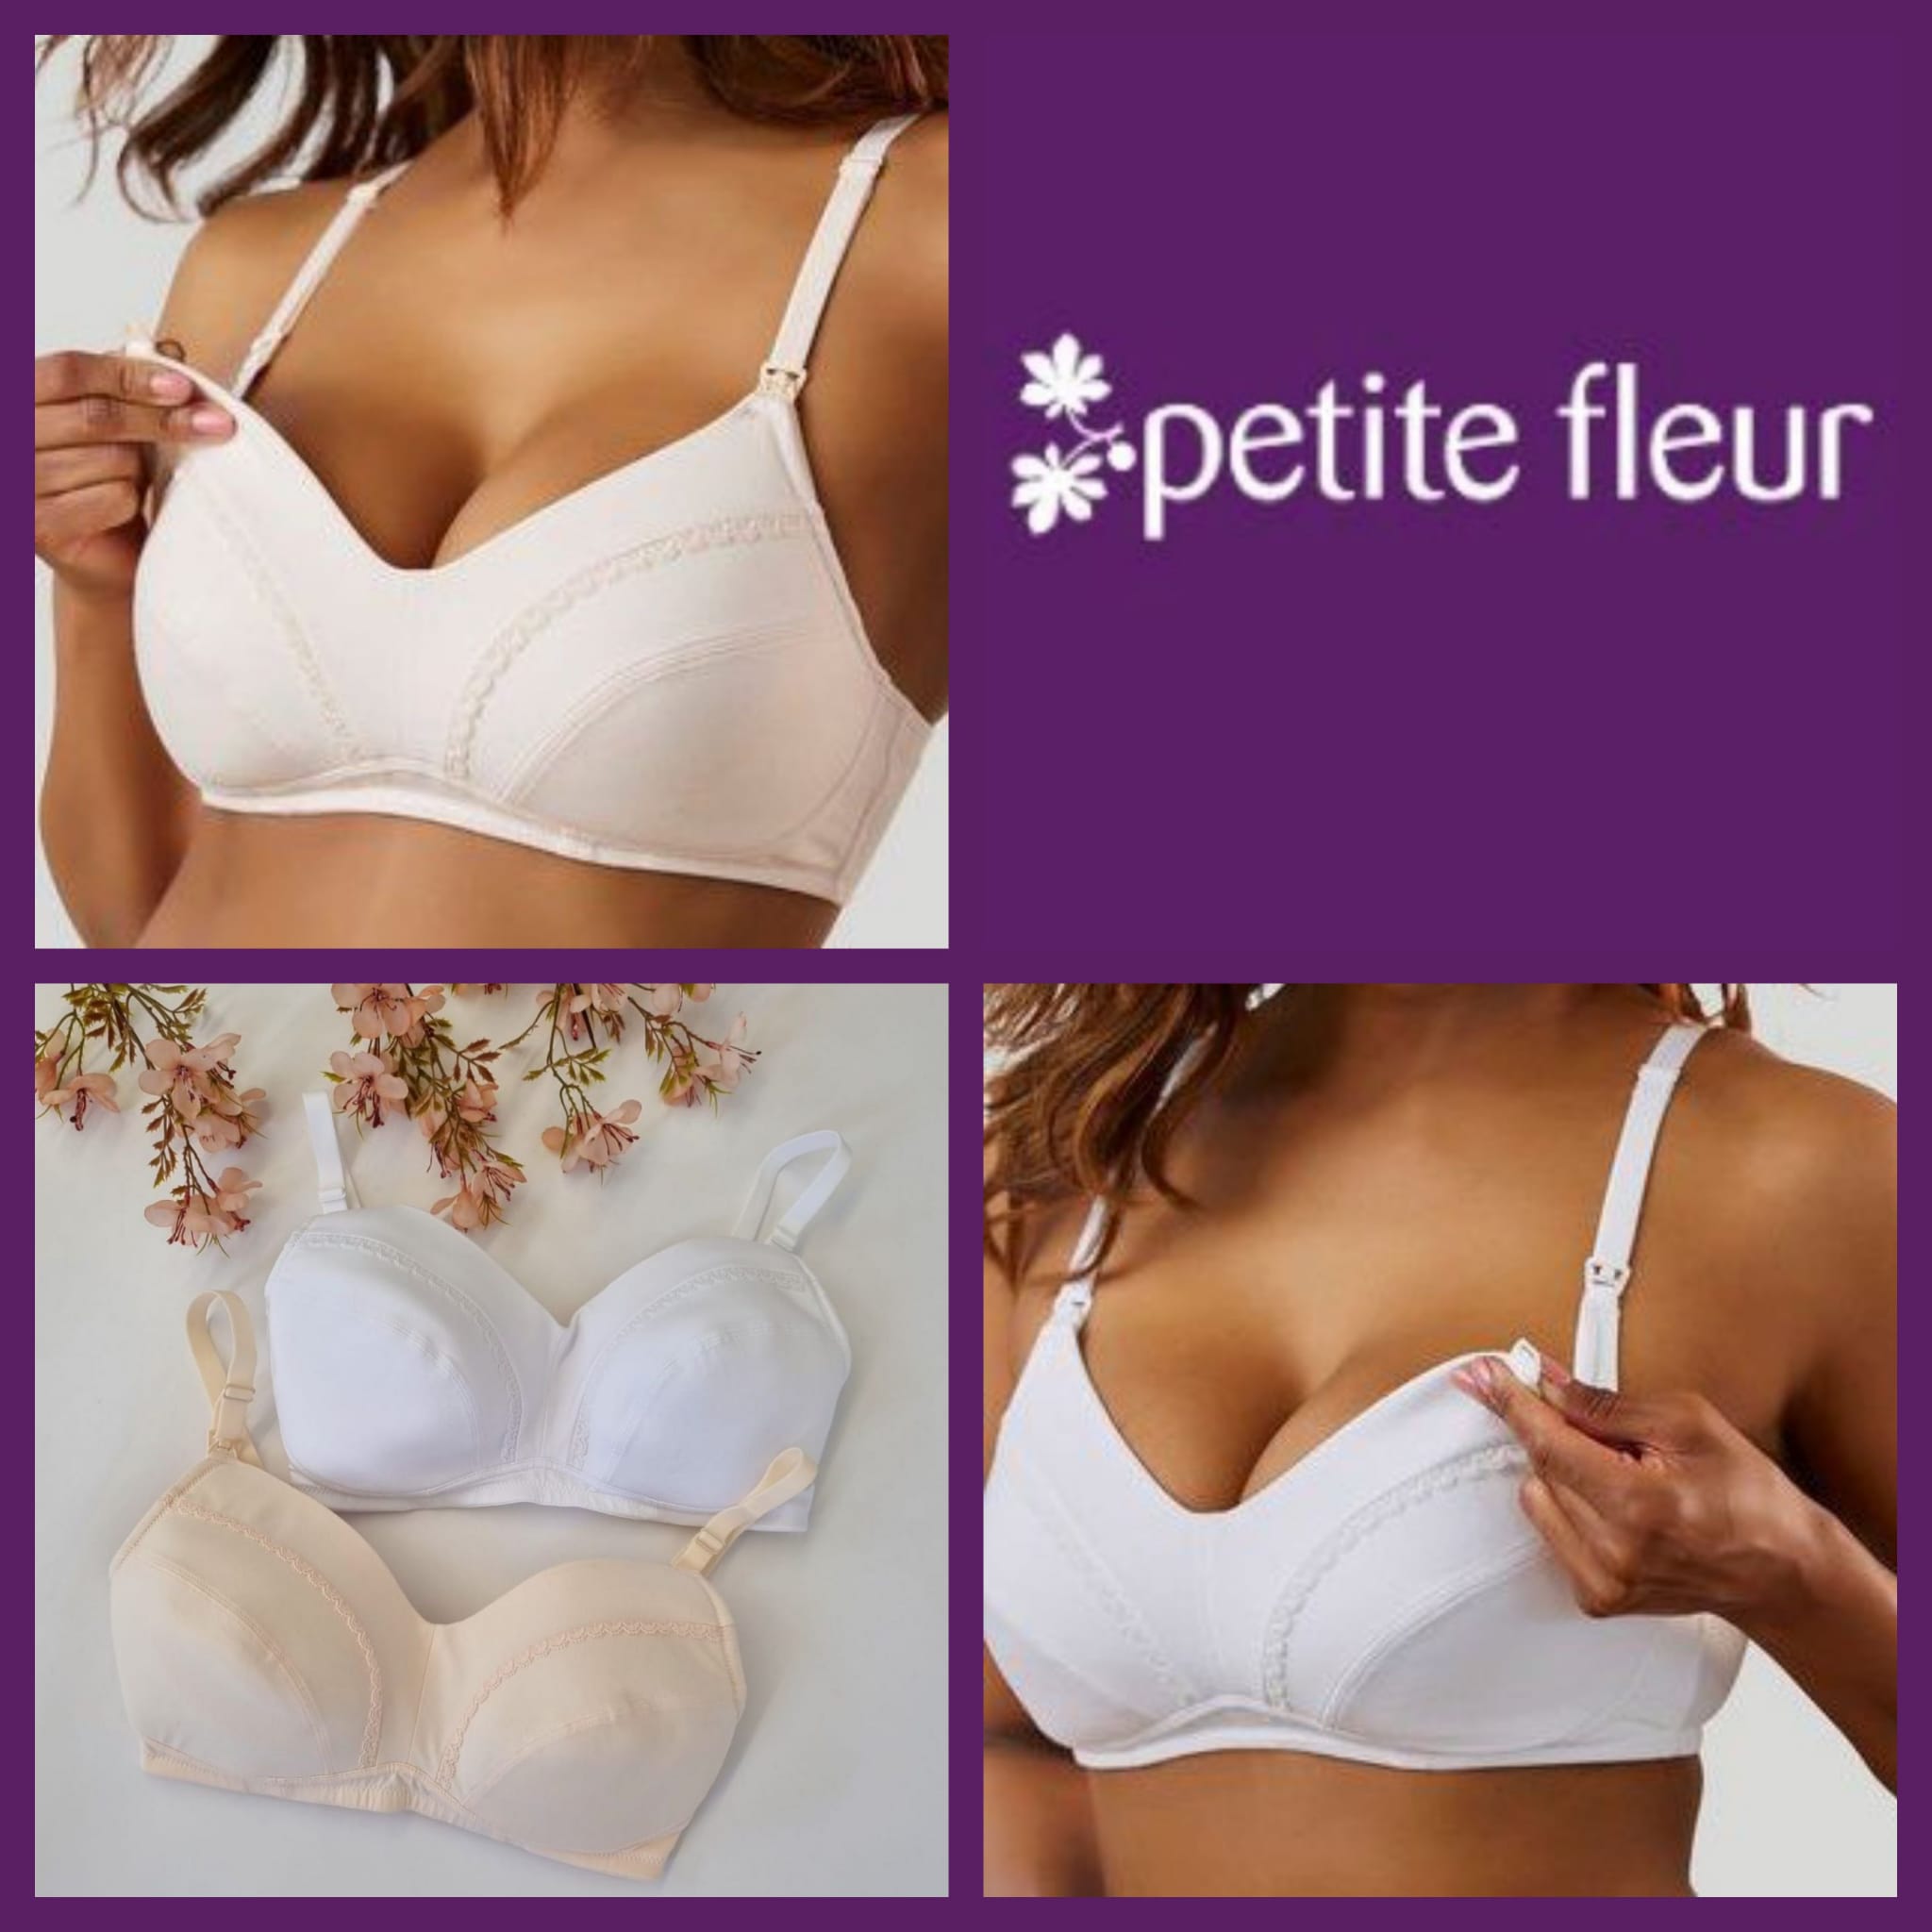 Plus-sizes bras from Petite fleur